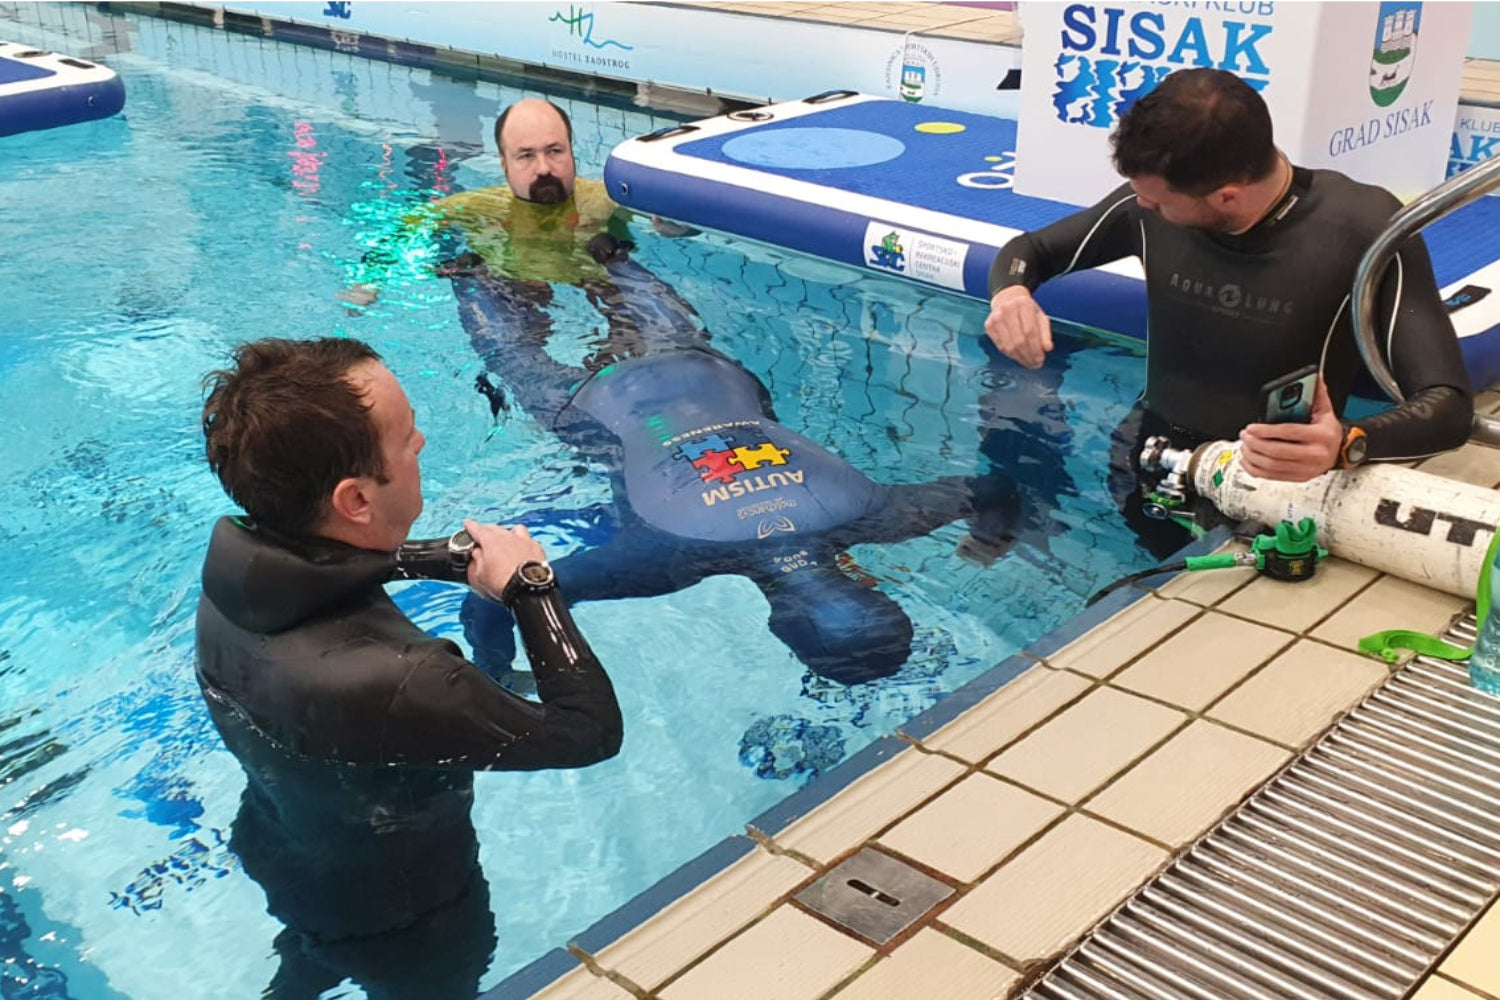 Press Release - Molchanovs Athletes Set 3 New World Records at Croatian Pool Freediving National Championships